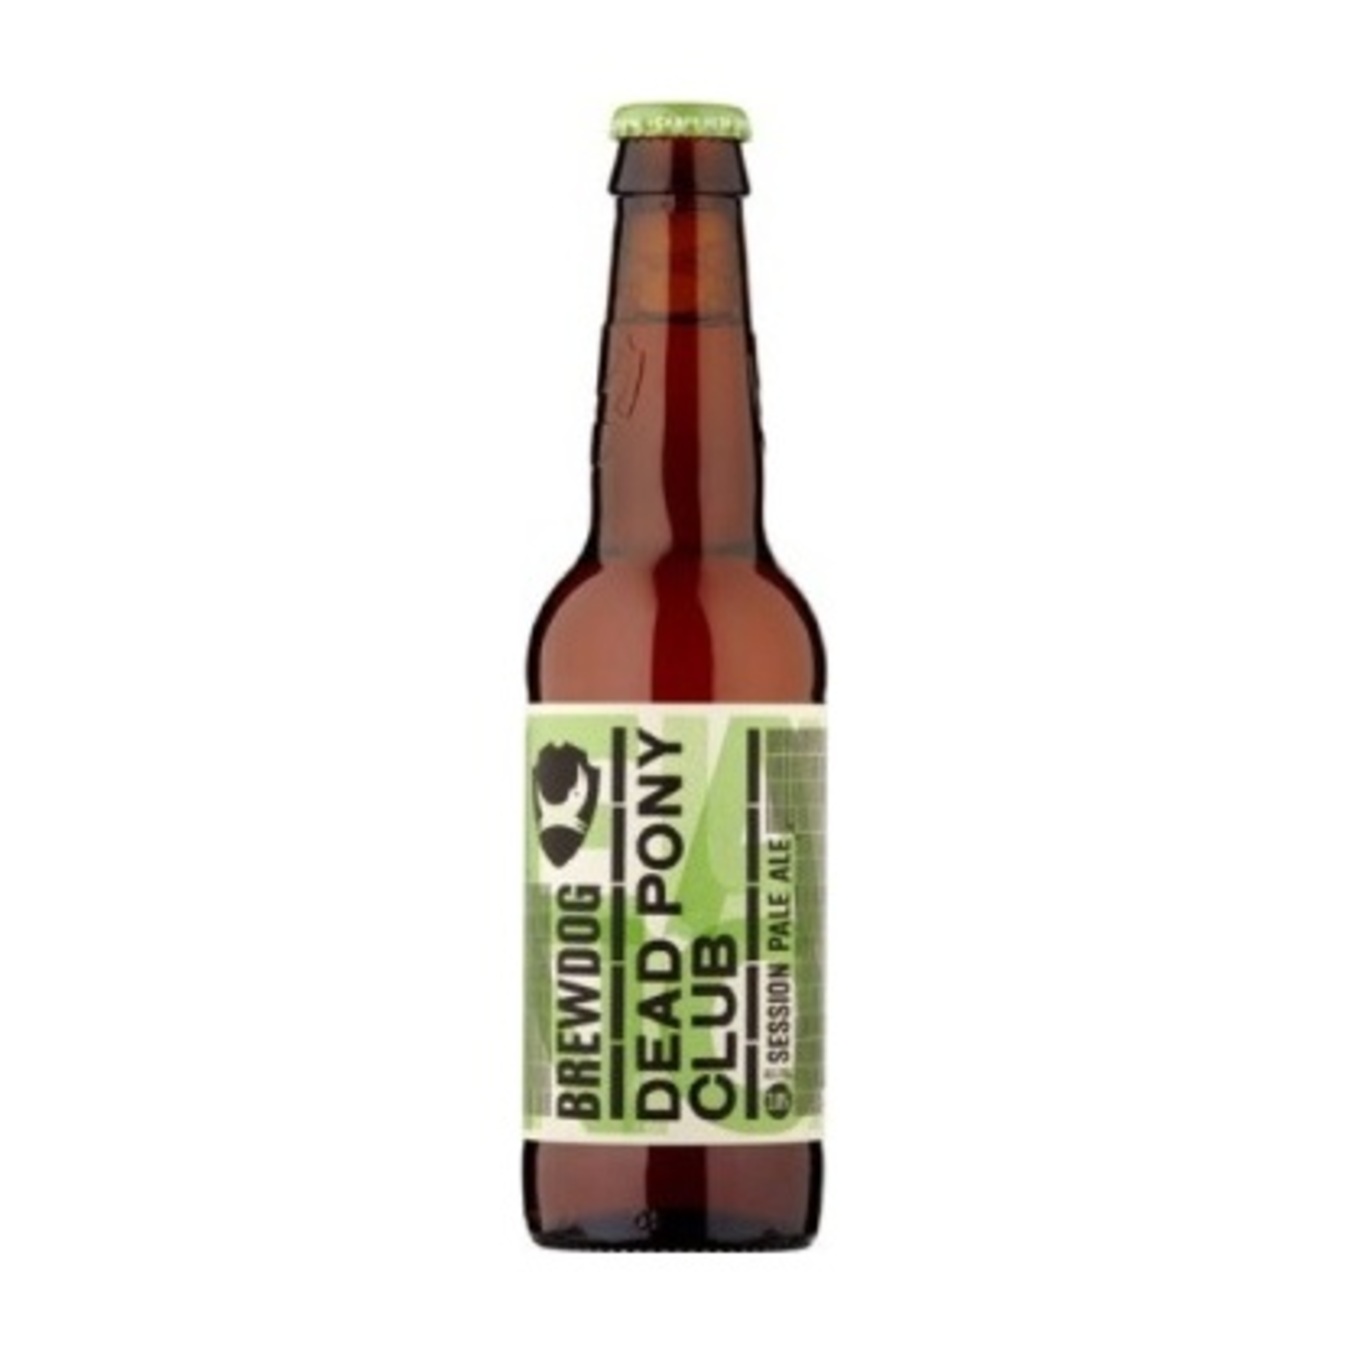 Light beer BrewDog Dead Pony Club 3.8% 0.33l glass